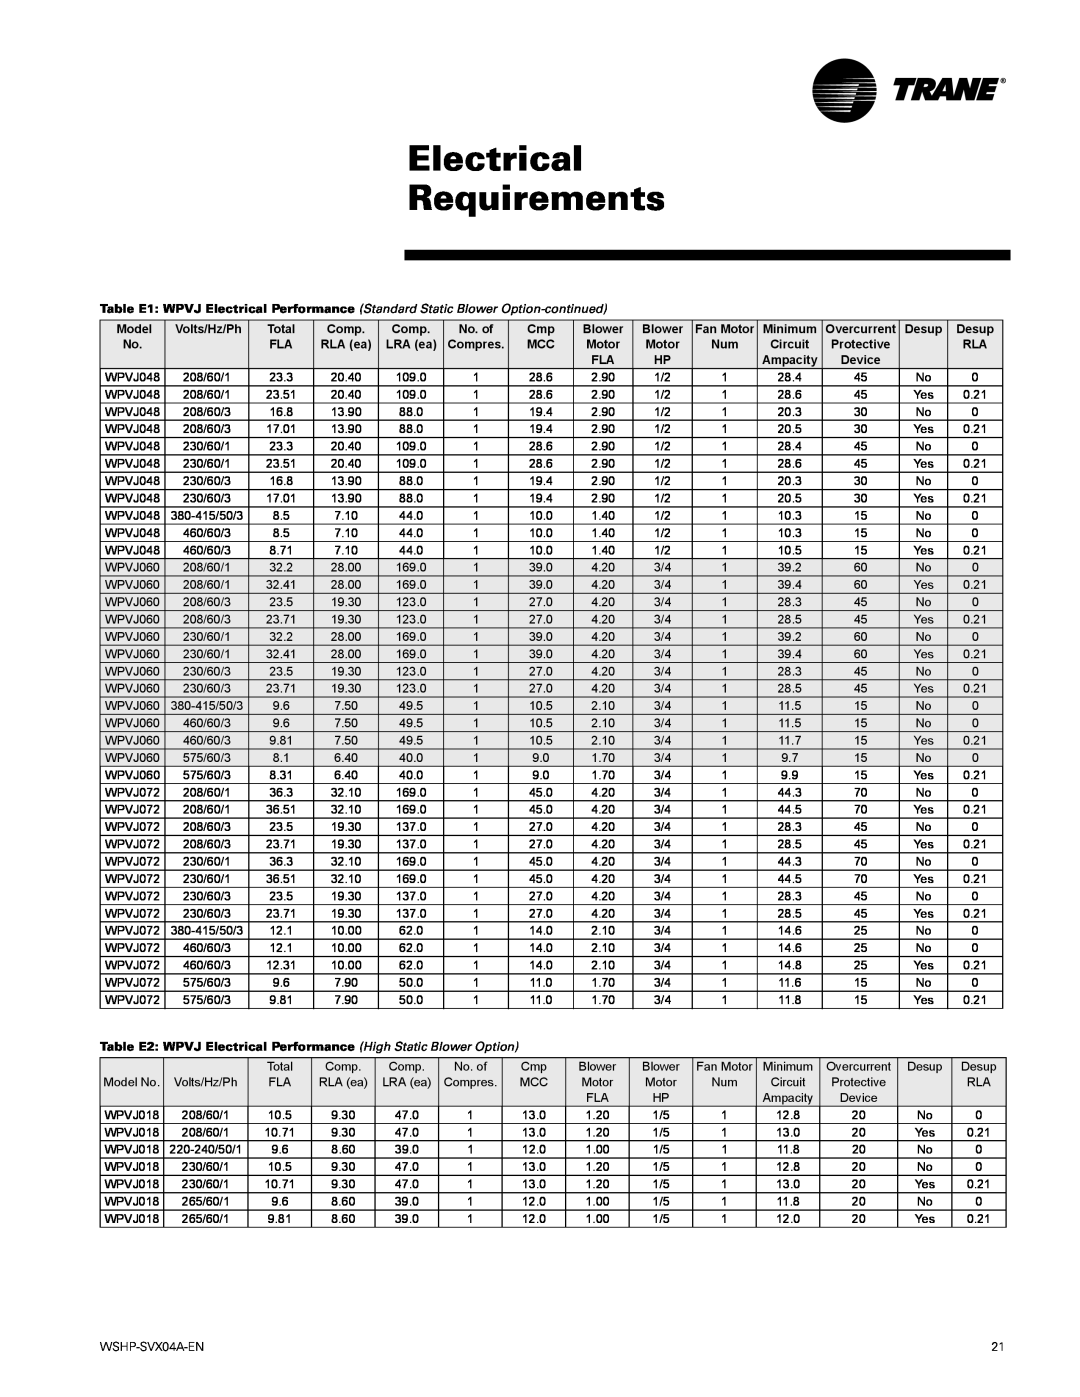 Trane WPVJ, WPHF manual Electrical Requirements, Model 